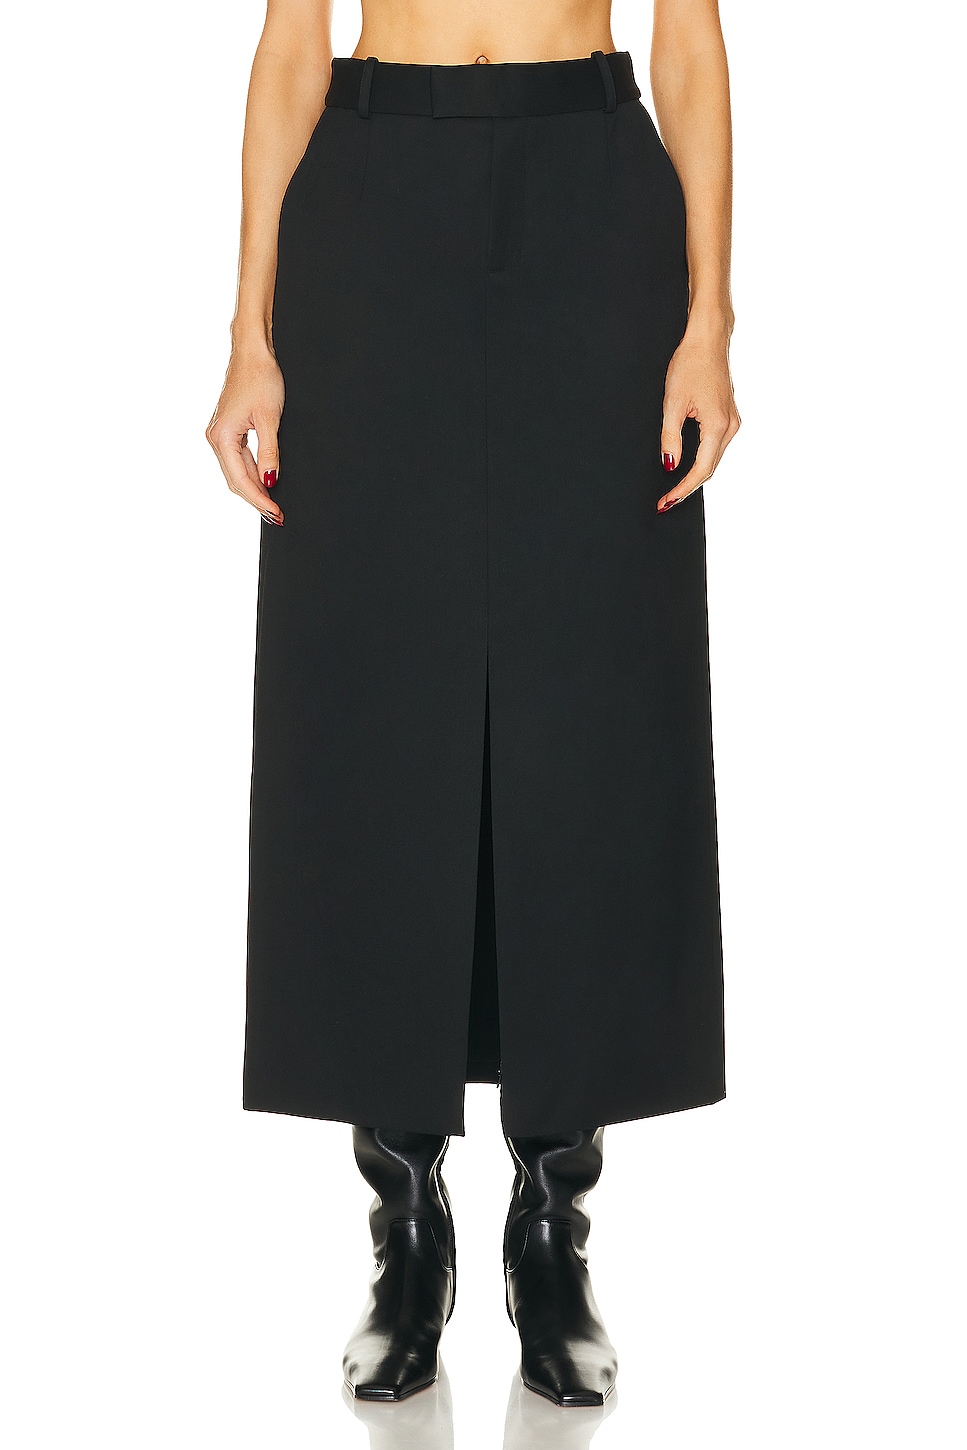 Image 1 of SIMKHAI Jalda Straight Skirt in Black